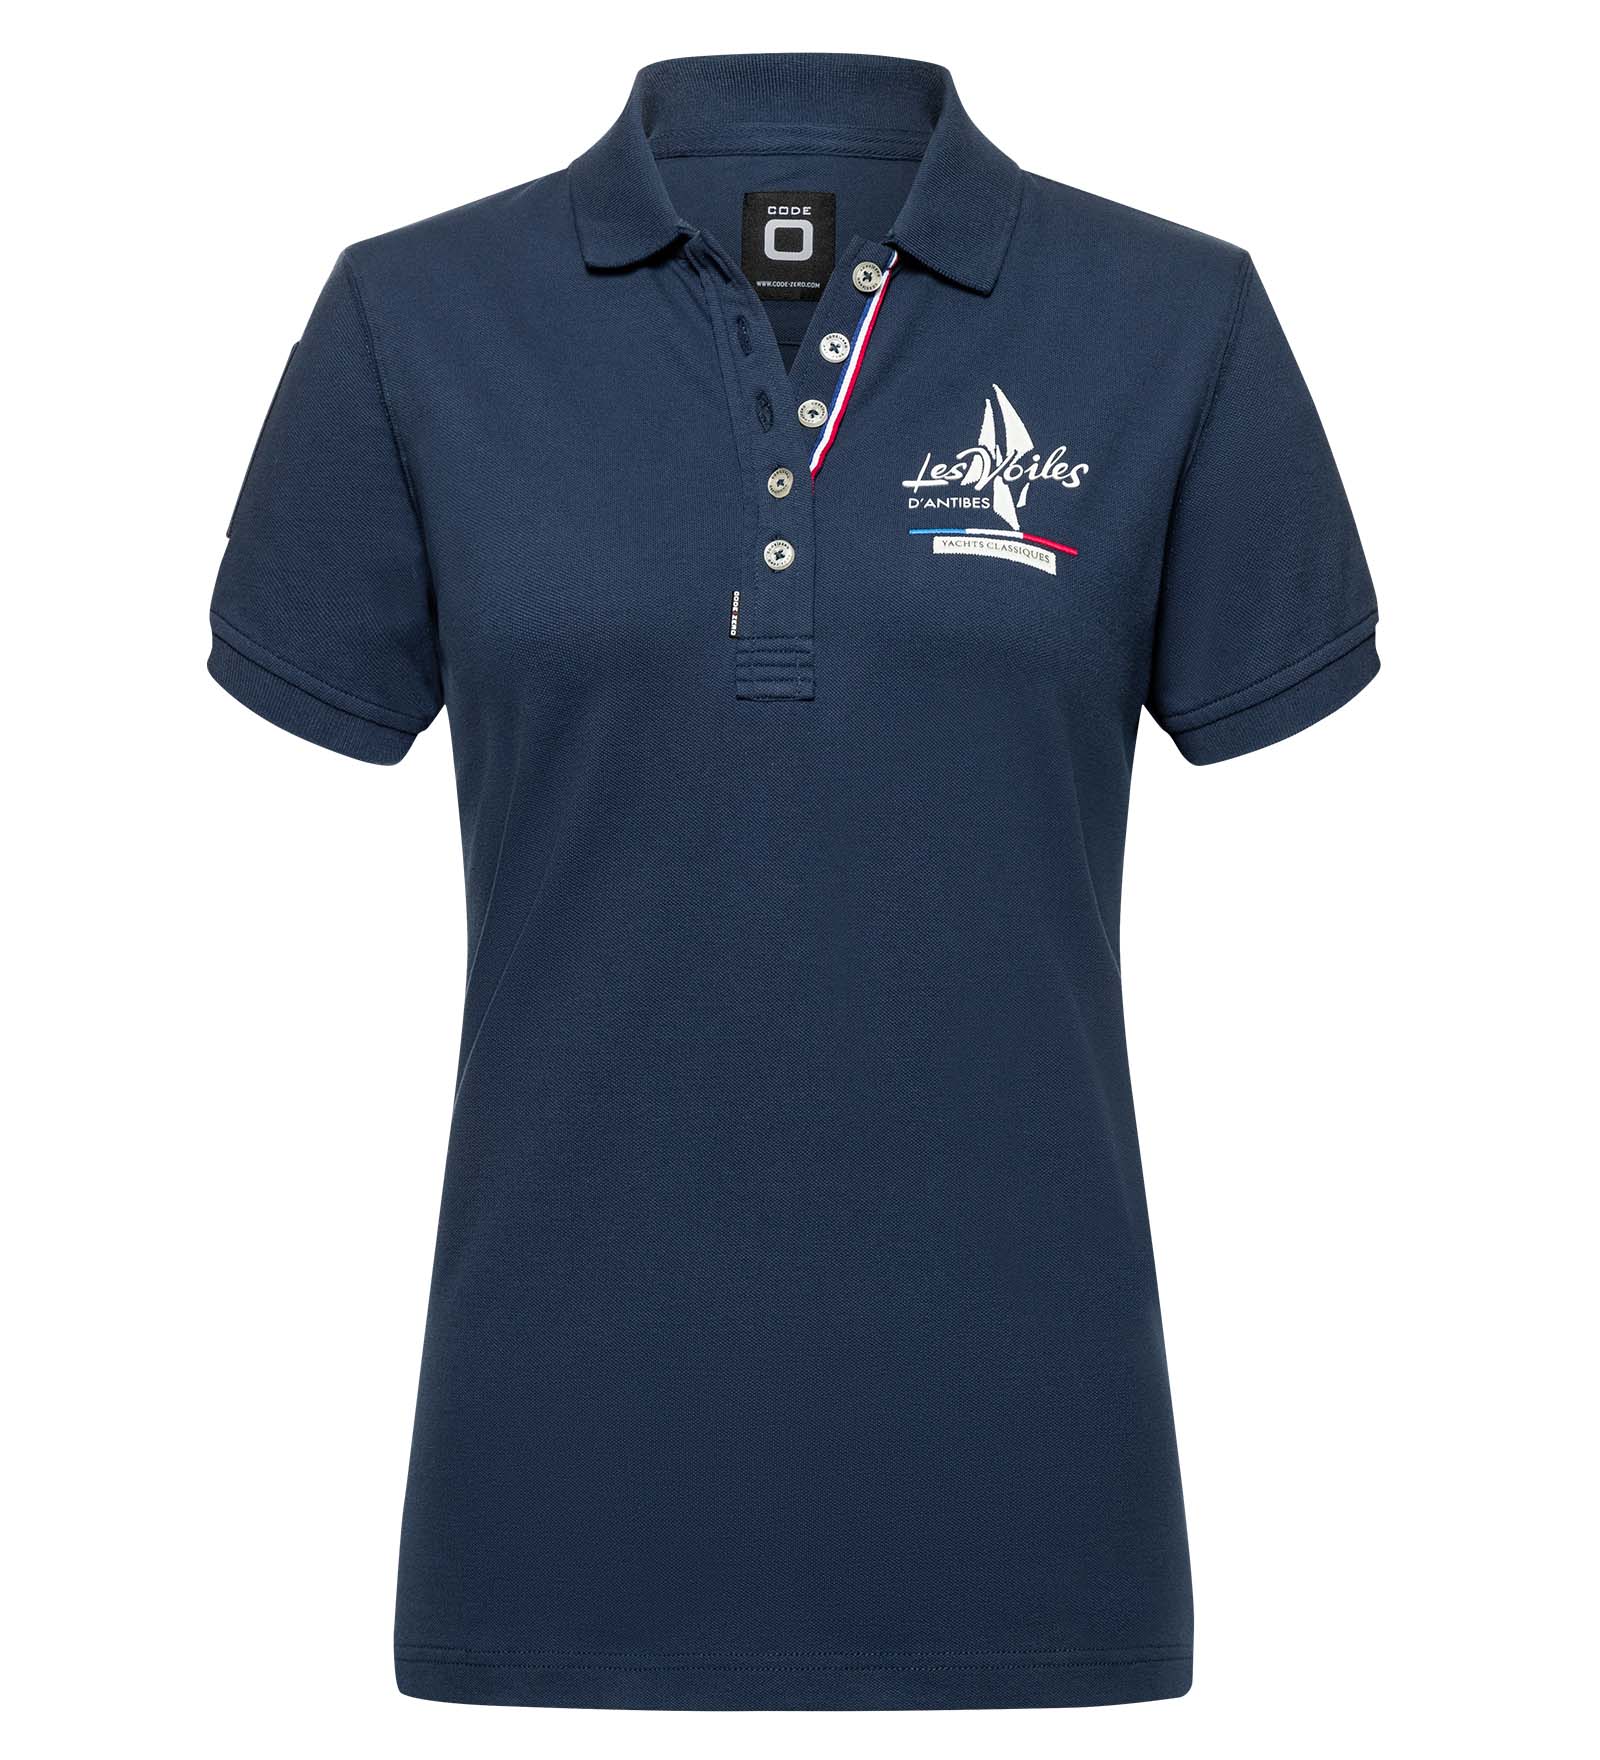 Poloshirt Damen 29th Edition